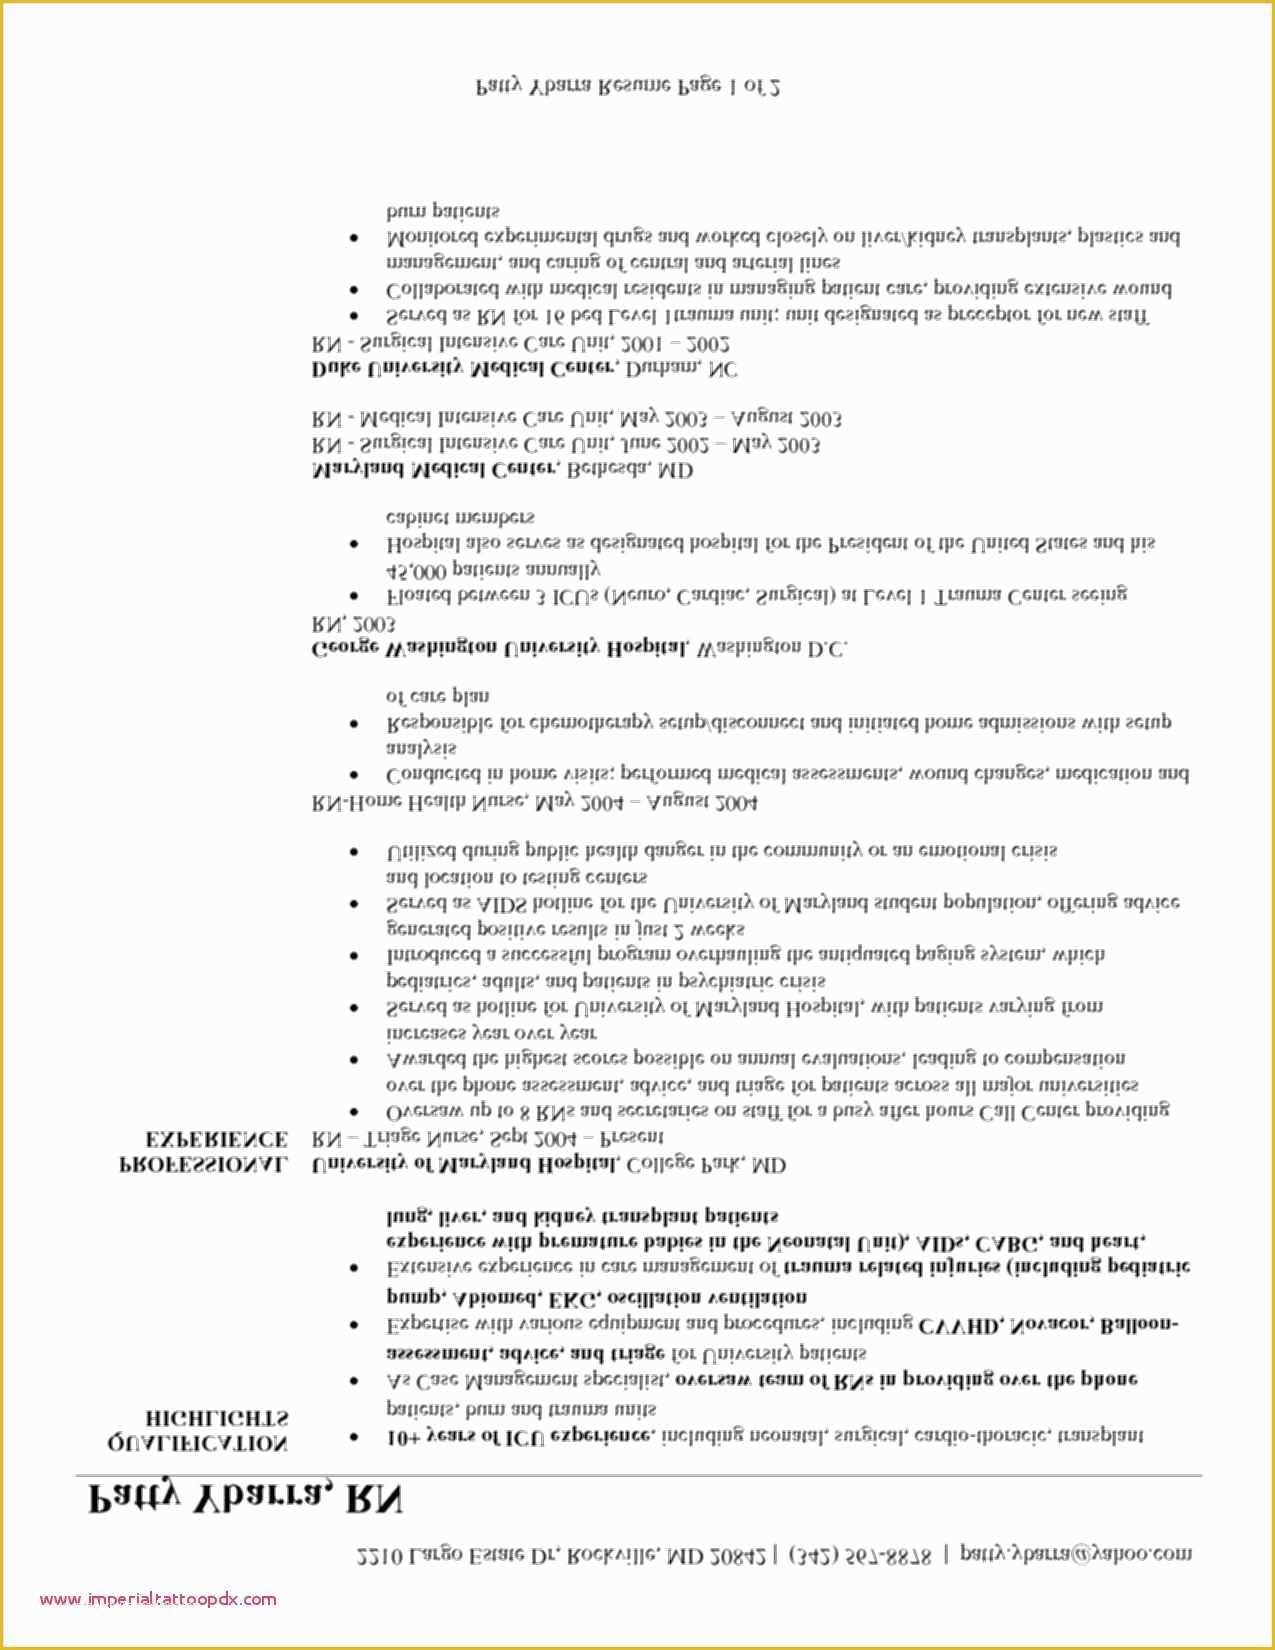 Free Lpn Resume Template Download Of Lpn Resume Sample New Cover Letter for Lpn Resume Rn